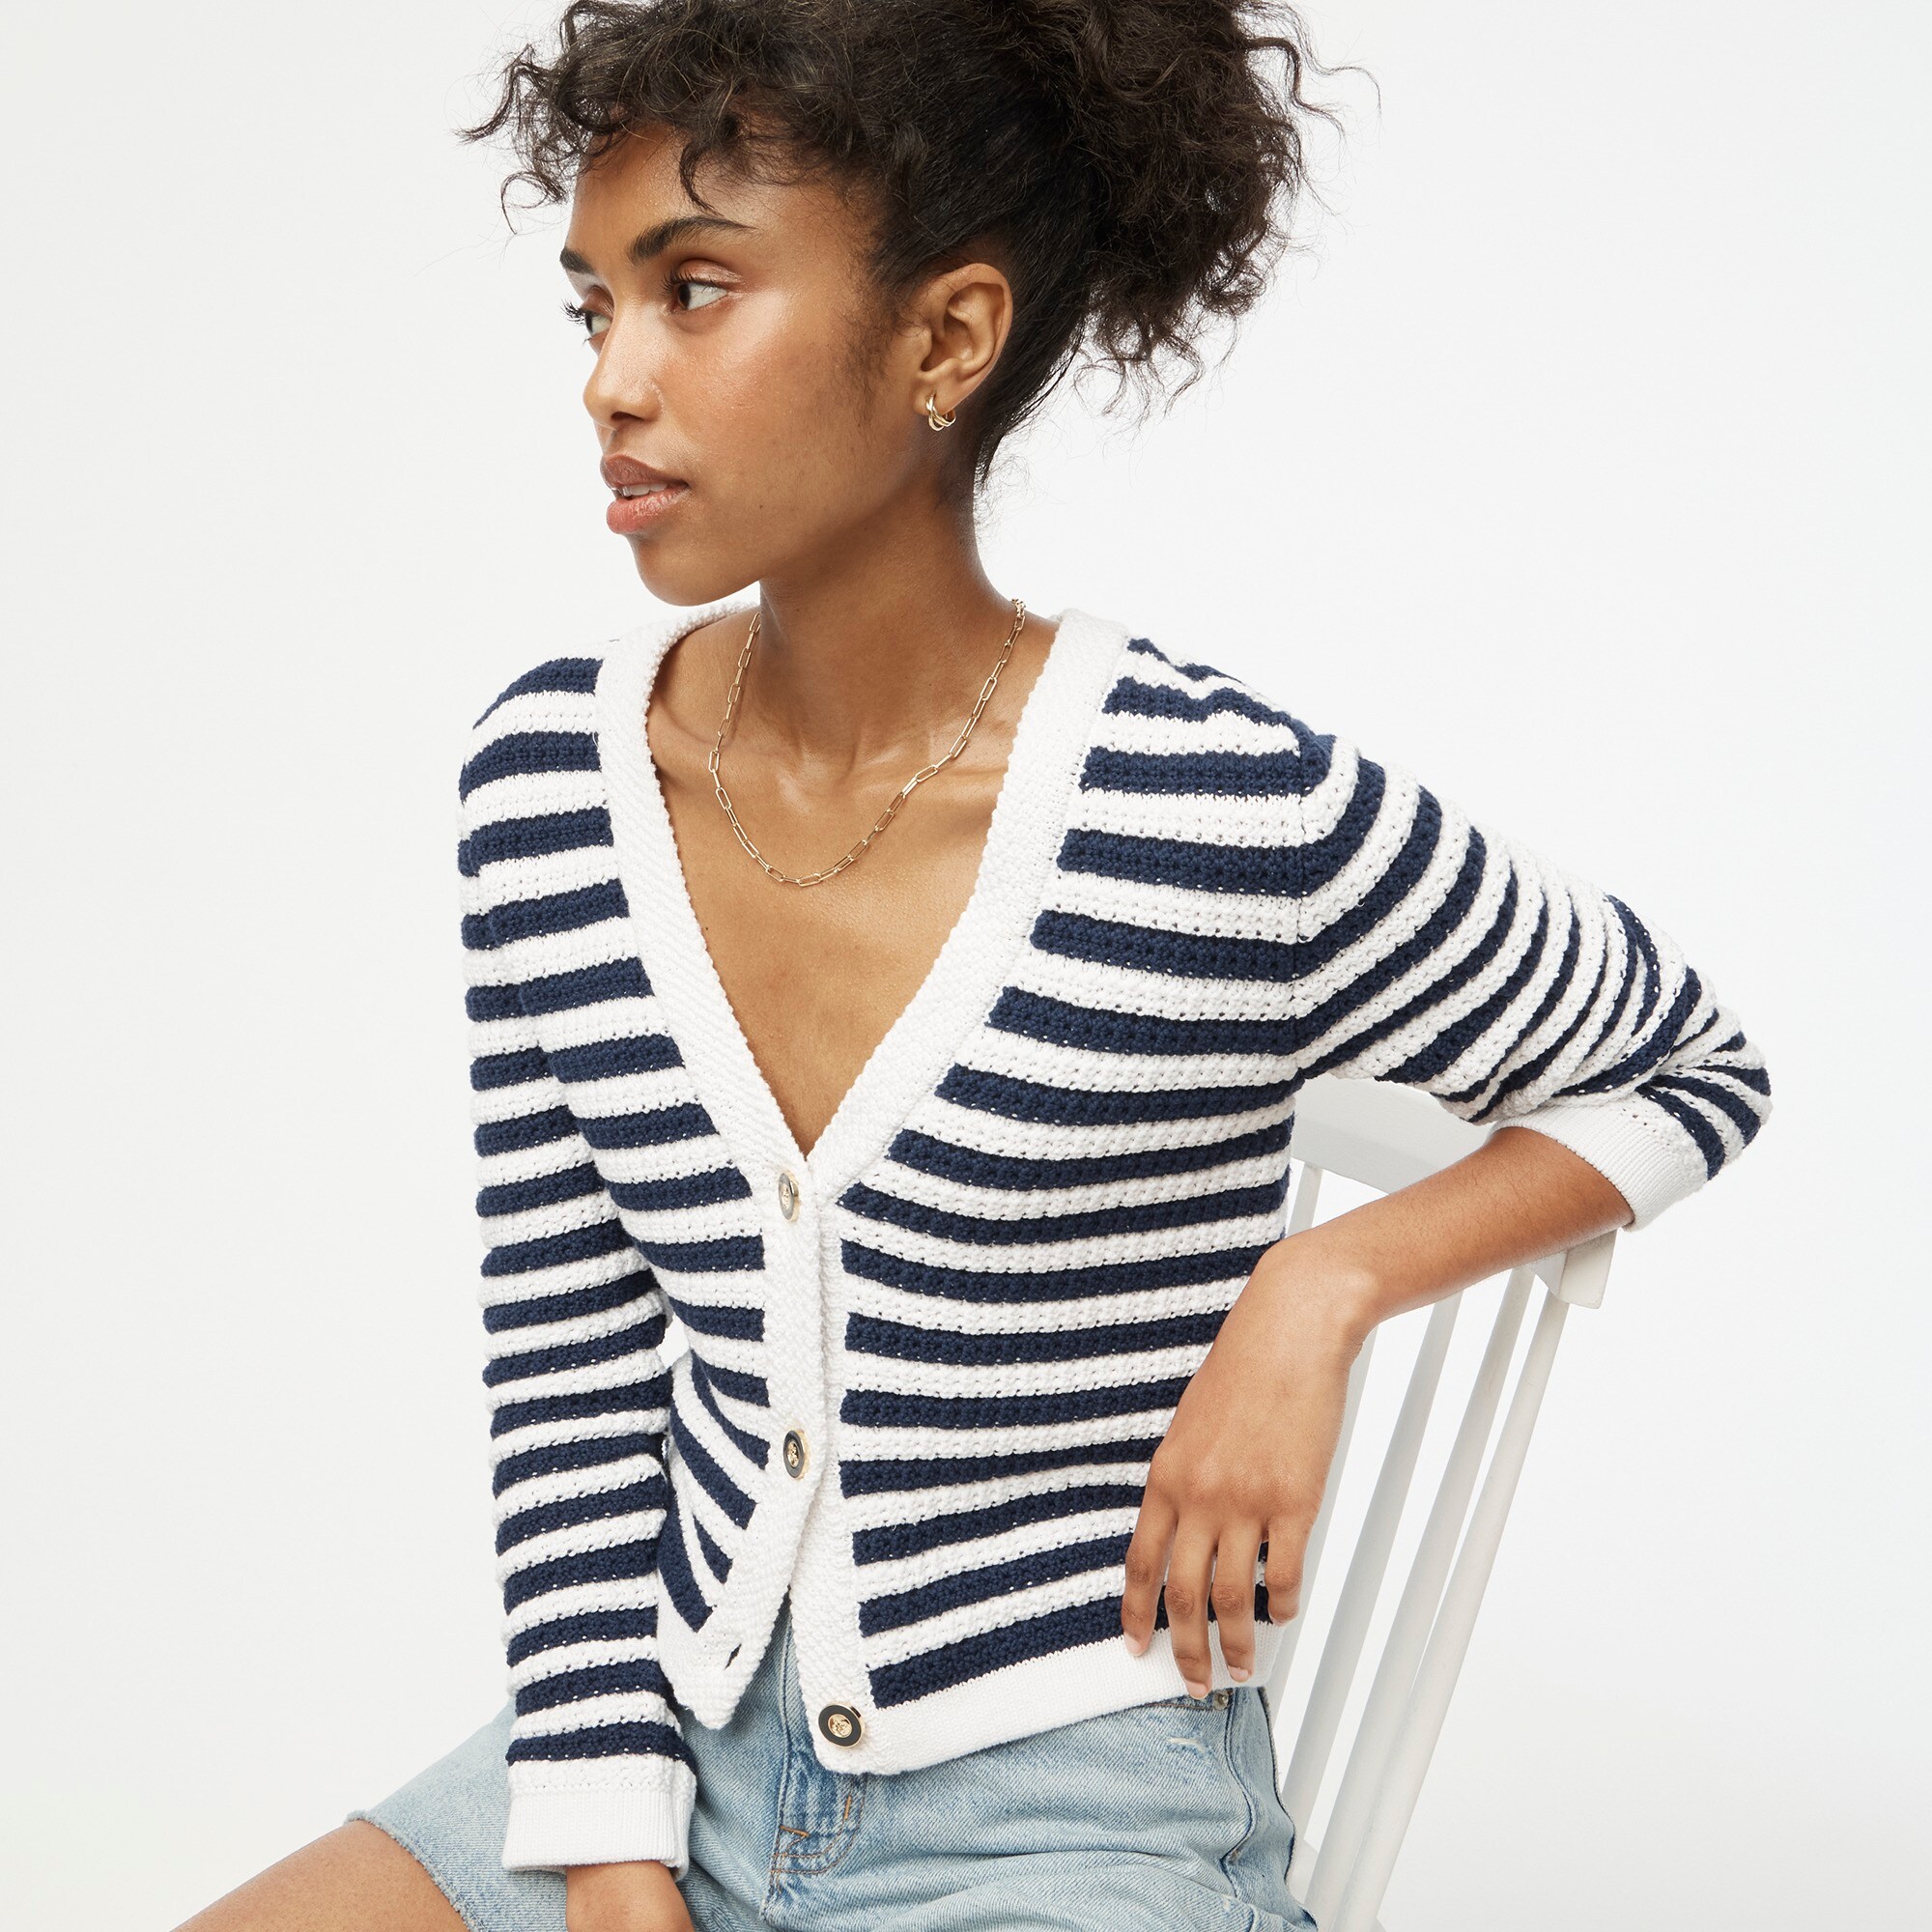 womens Striped knit V-neck cardigan sweater